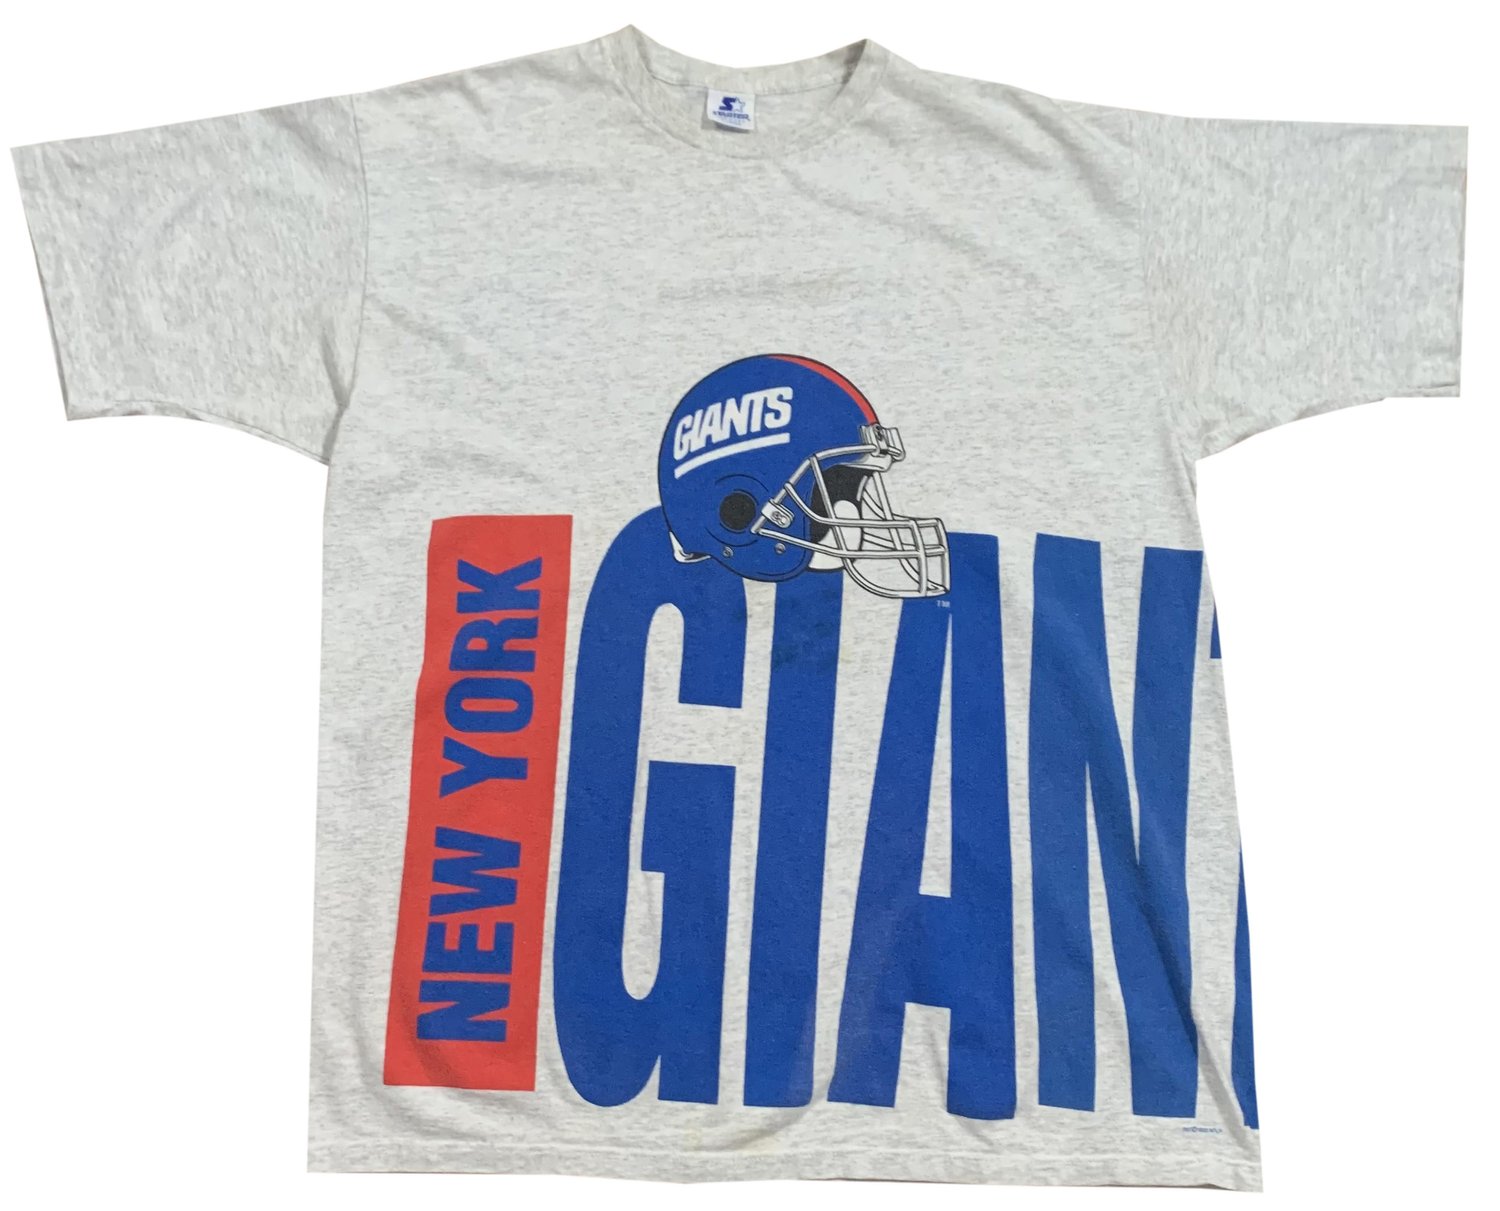 new york giants shirt